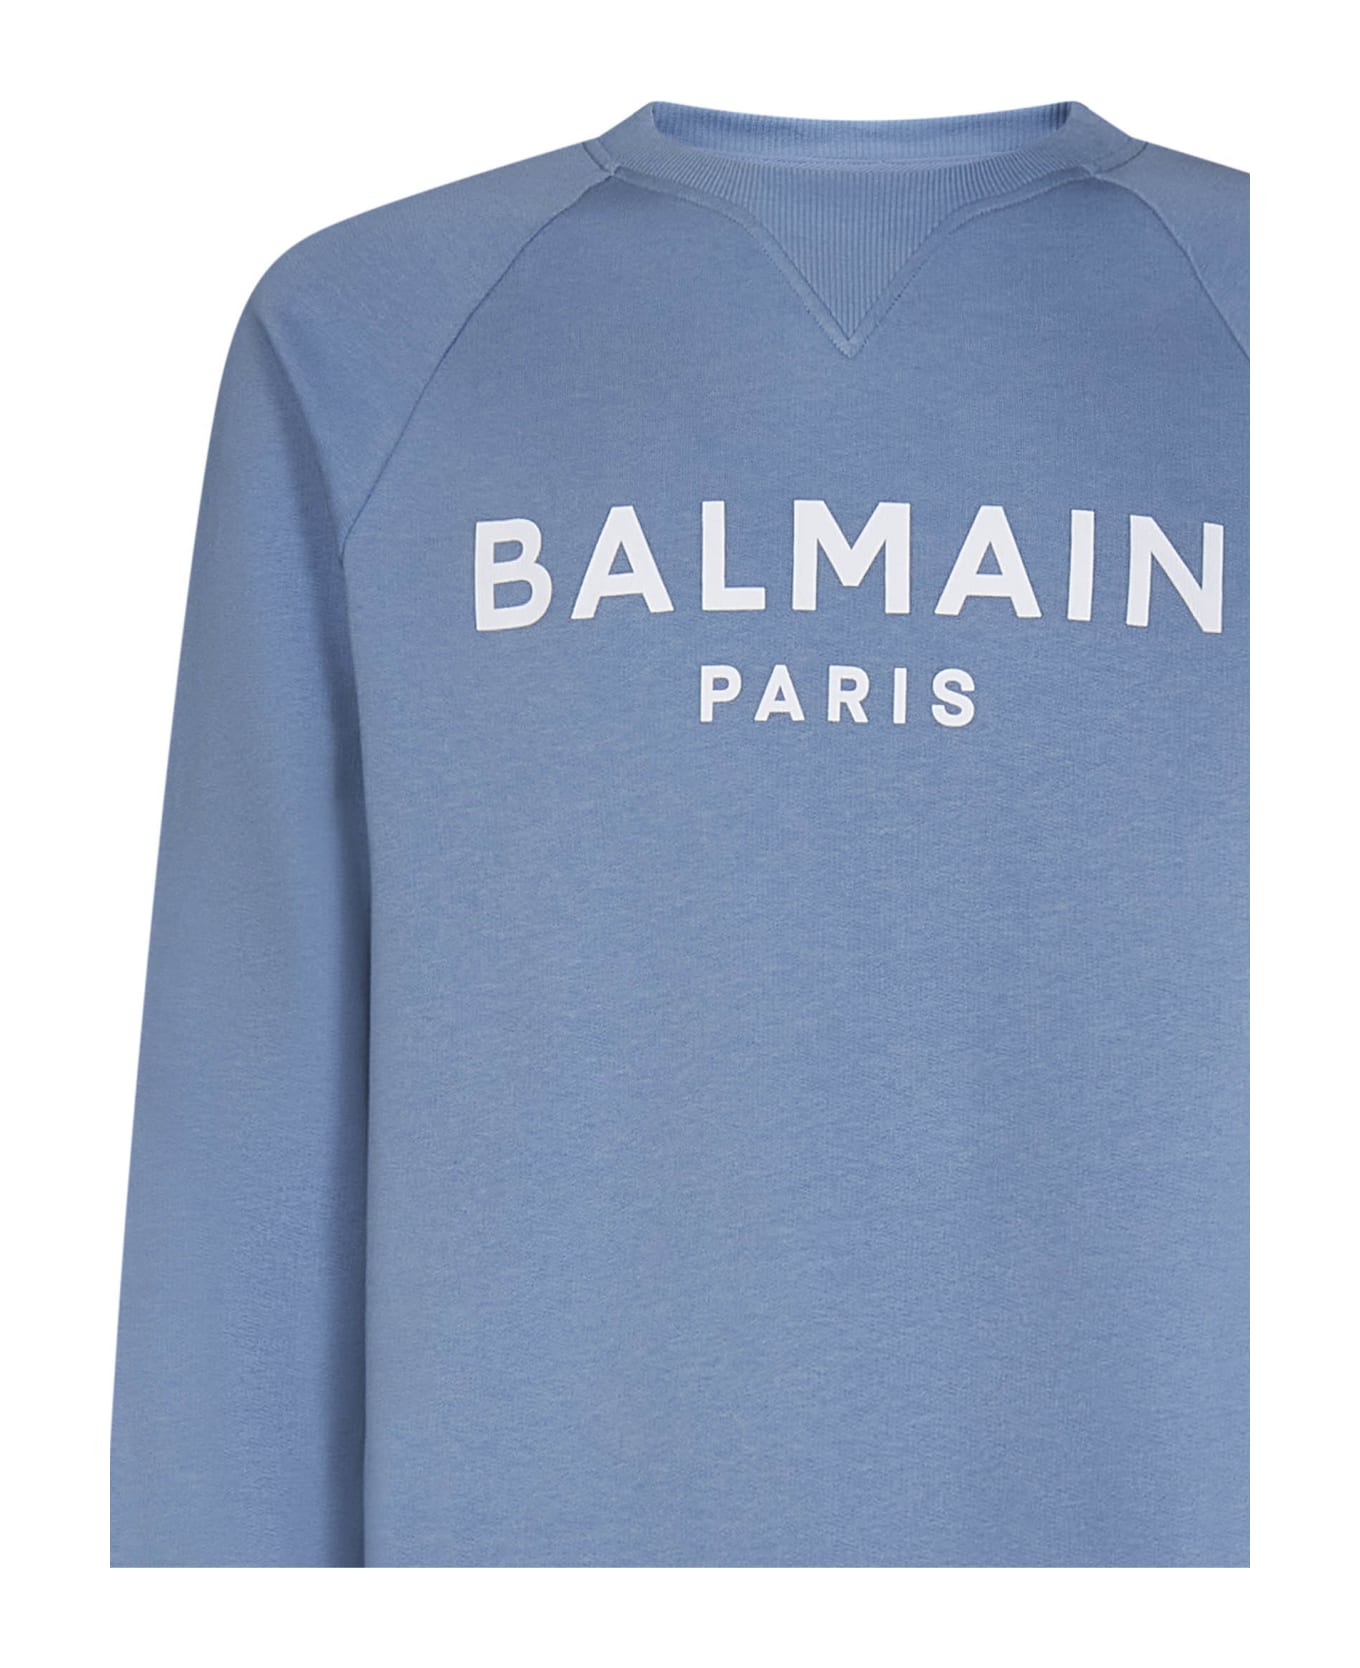 Balmain Paris  Paris Sweatshirt - Blue